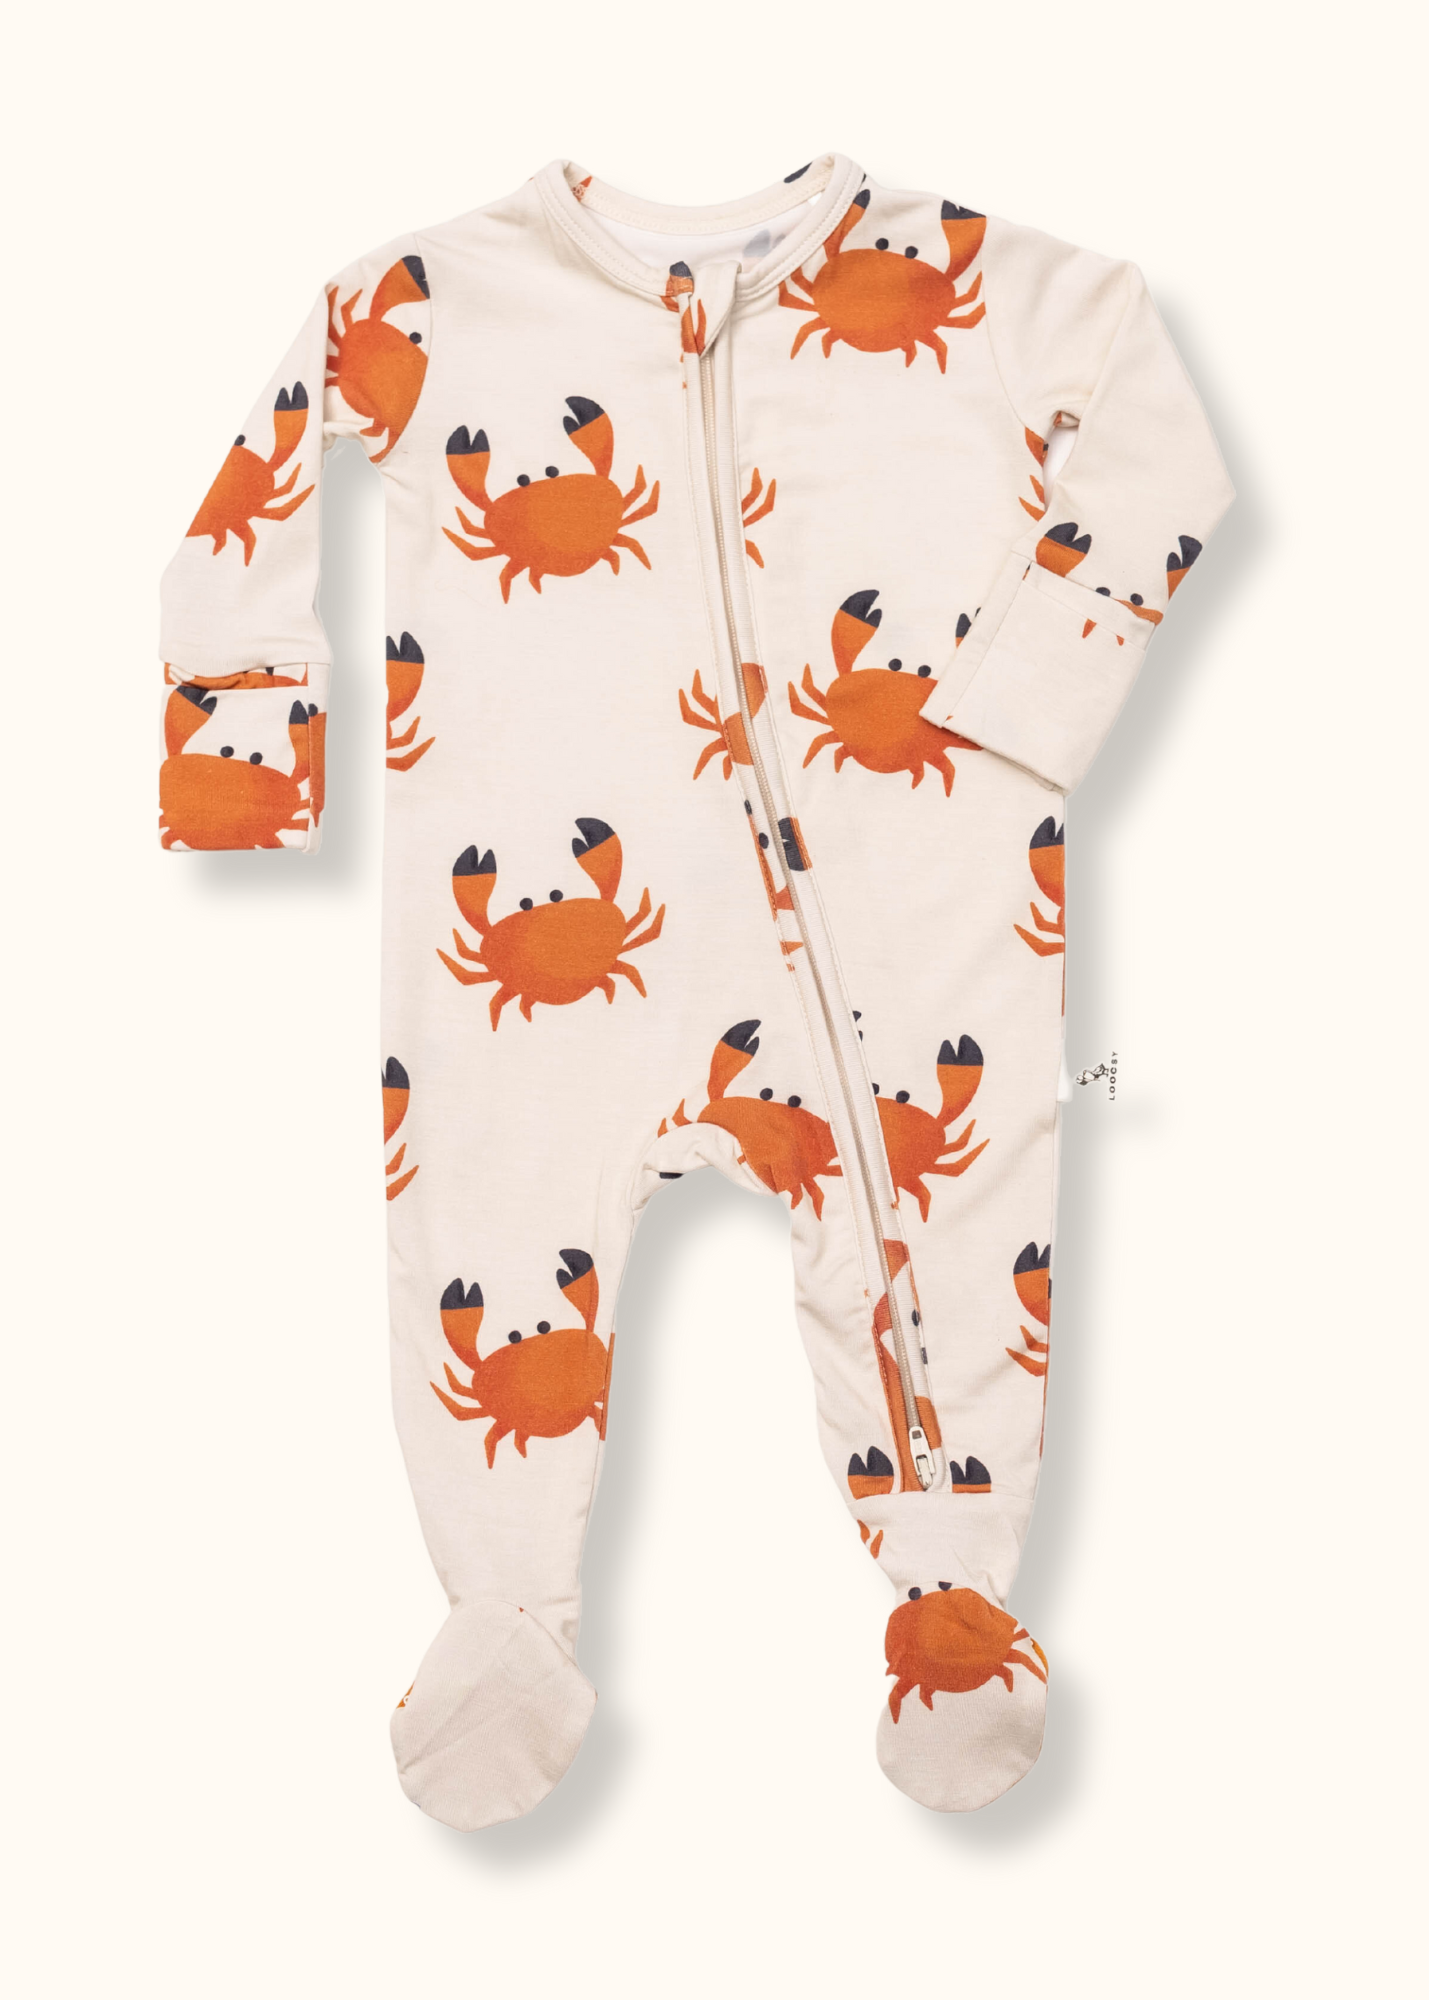 Mr. Crab Footie Pajama